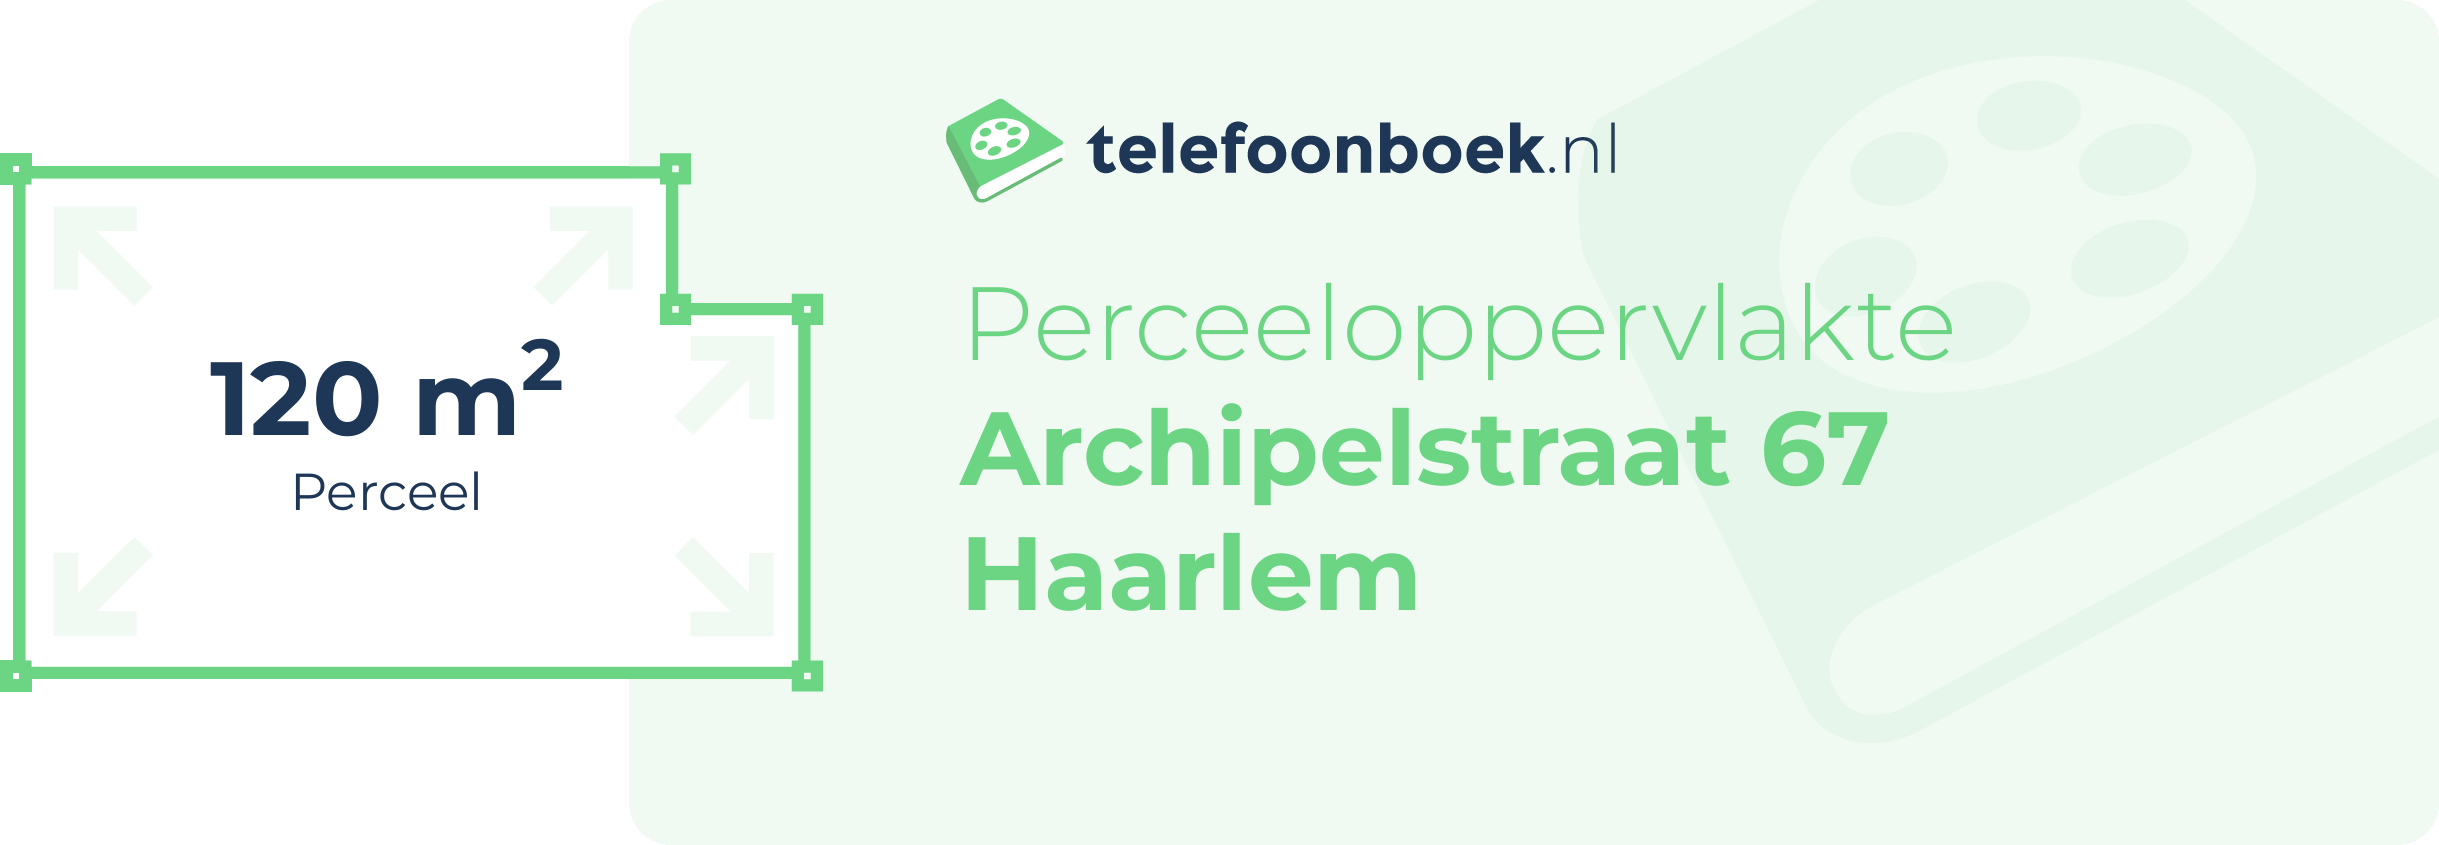 Perceeloppervlakte Archipelstraat 67 Haarlem